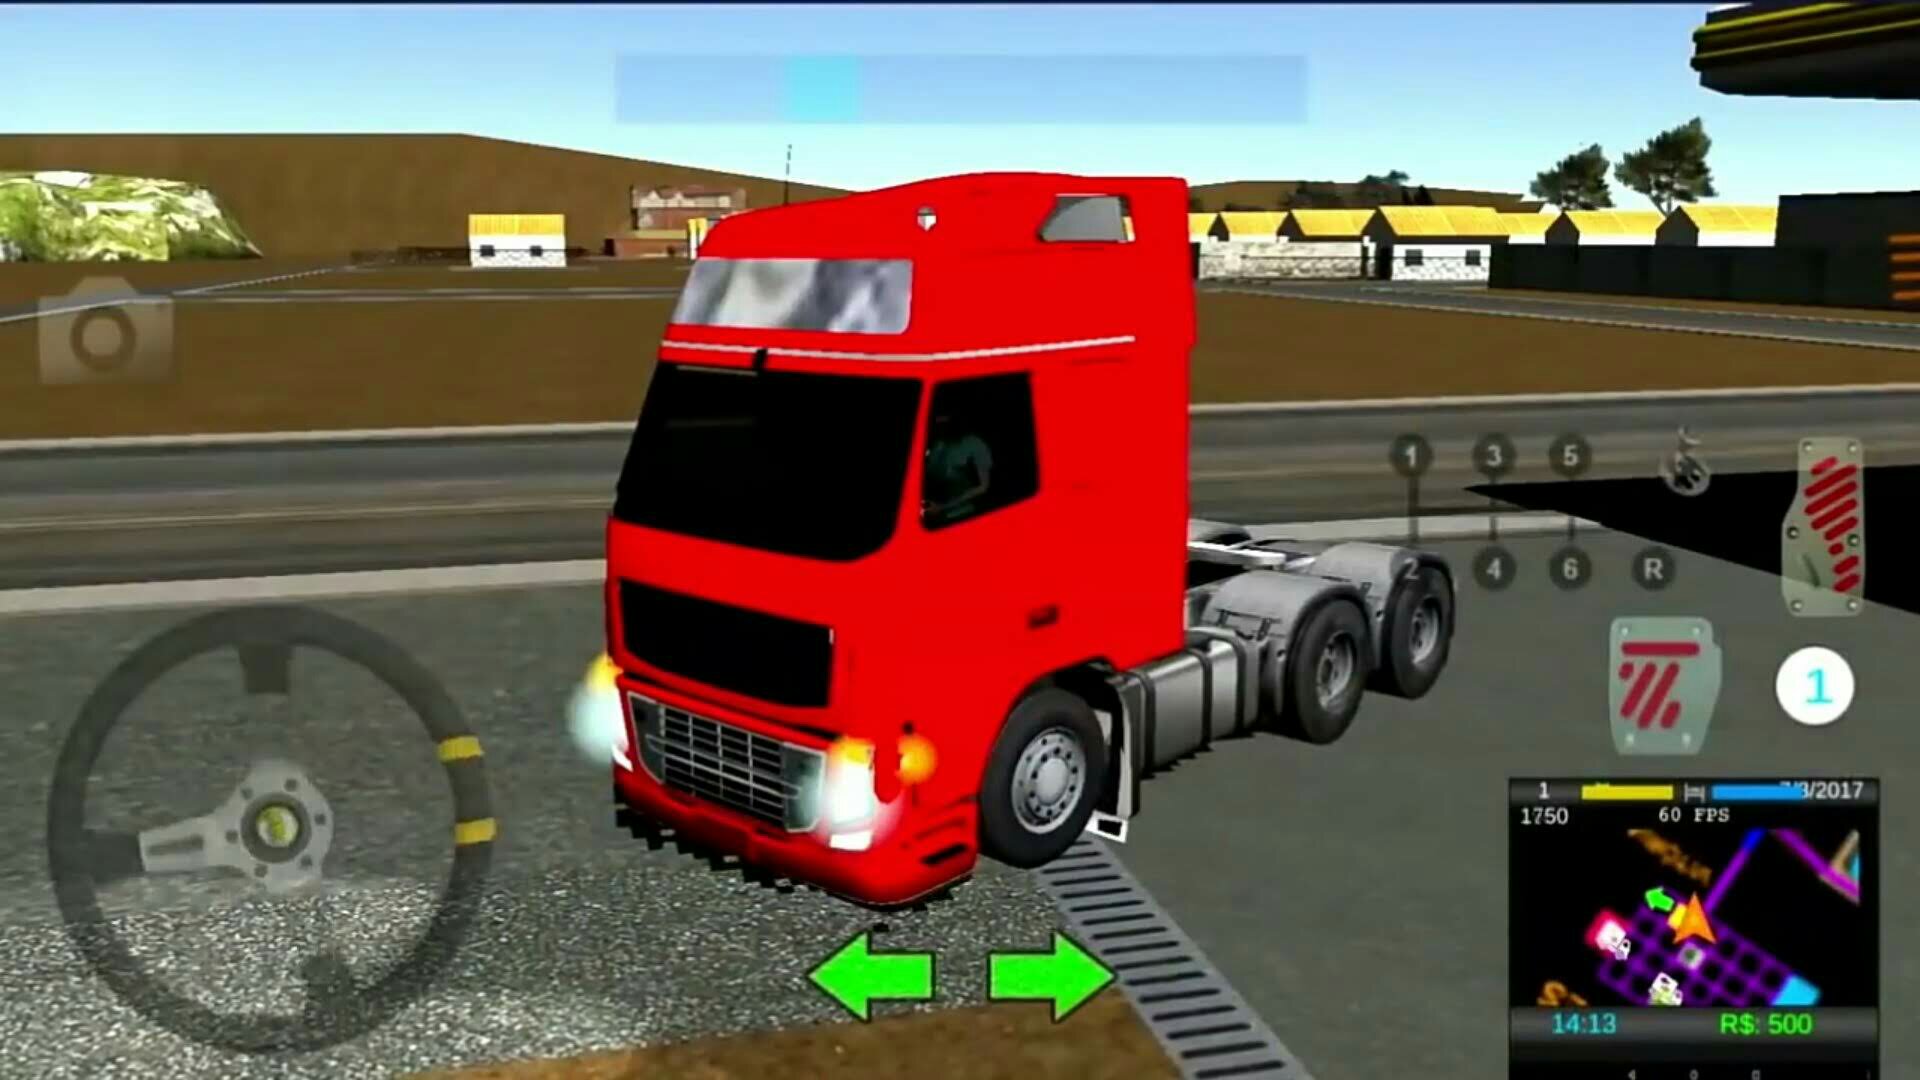 Jogos de caminhões Brasileiros APK (Android App) - Descarga Gratis